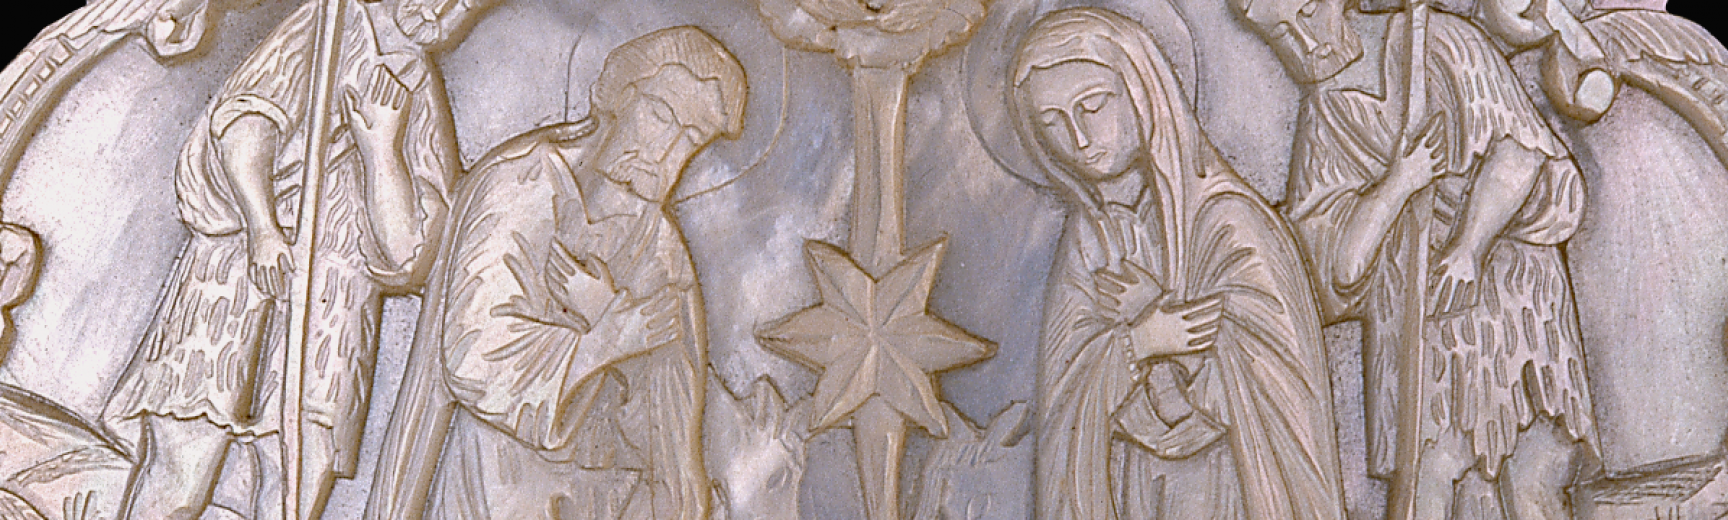 The Nativity on a Carved Pilgrim Souvenir